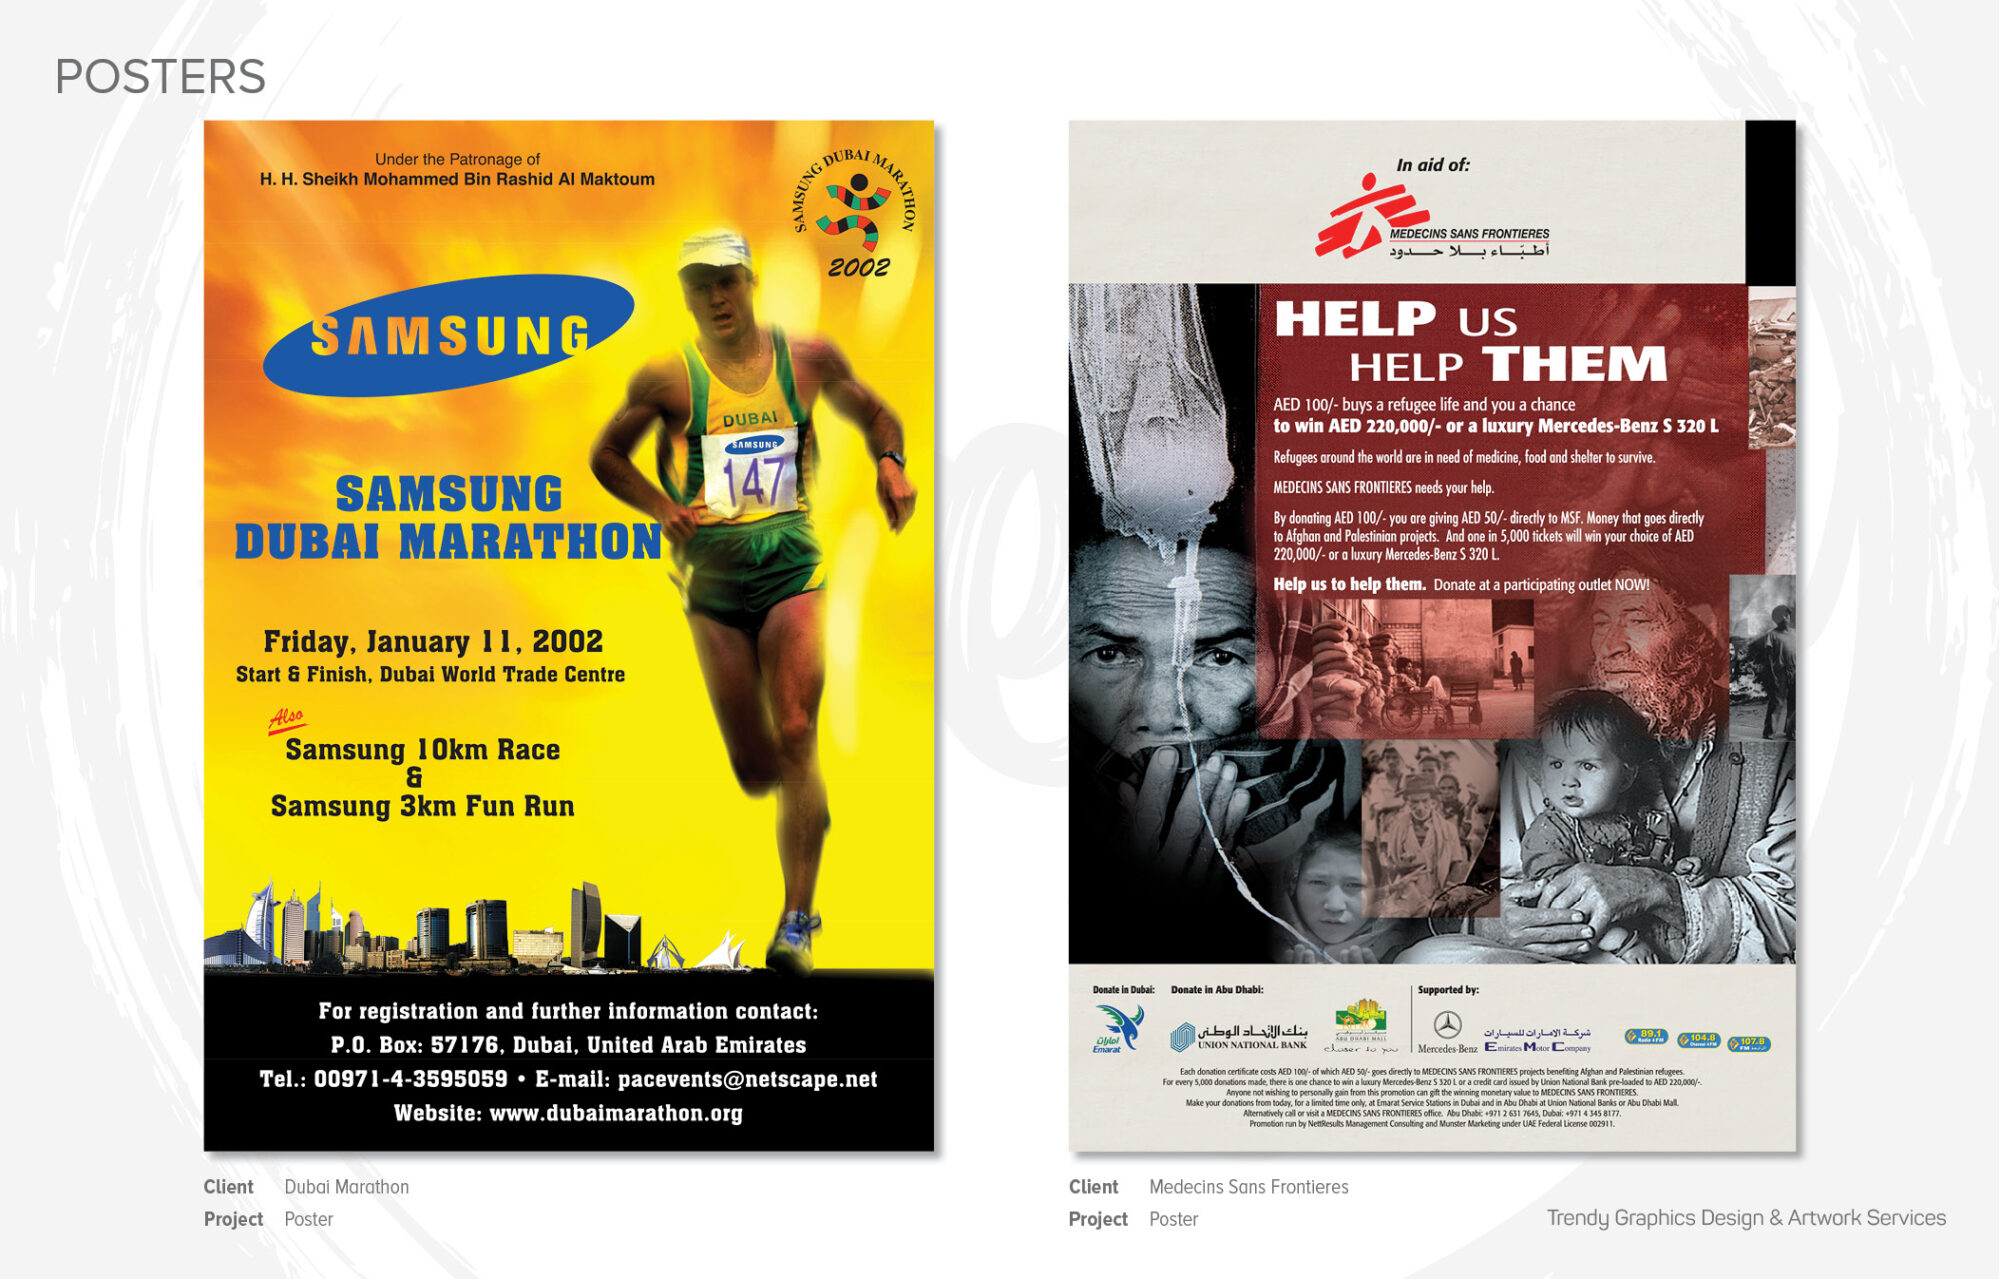 Dubai Marathon – Poster, Medecins Sans Frontieres – Poster